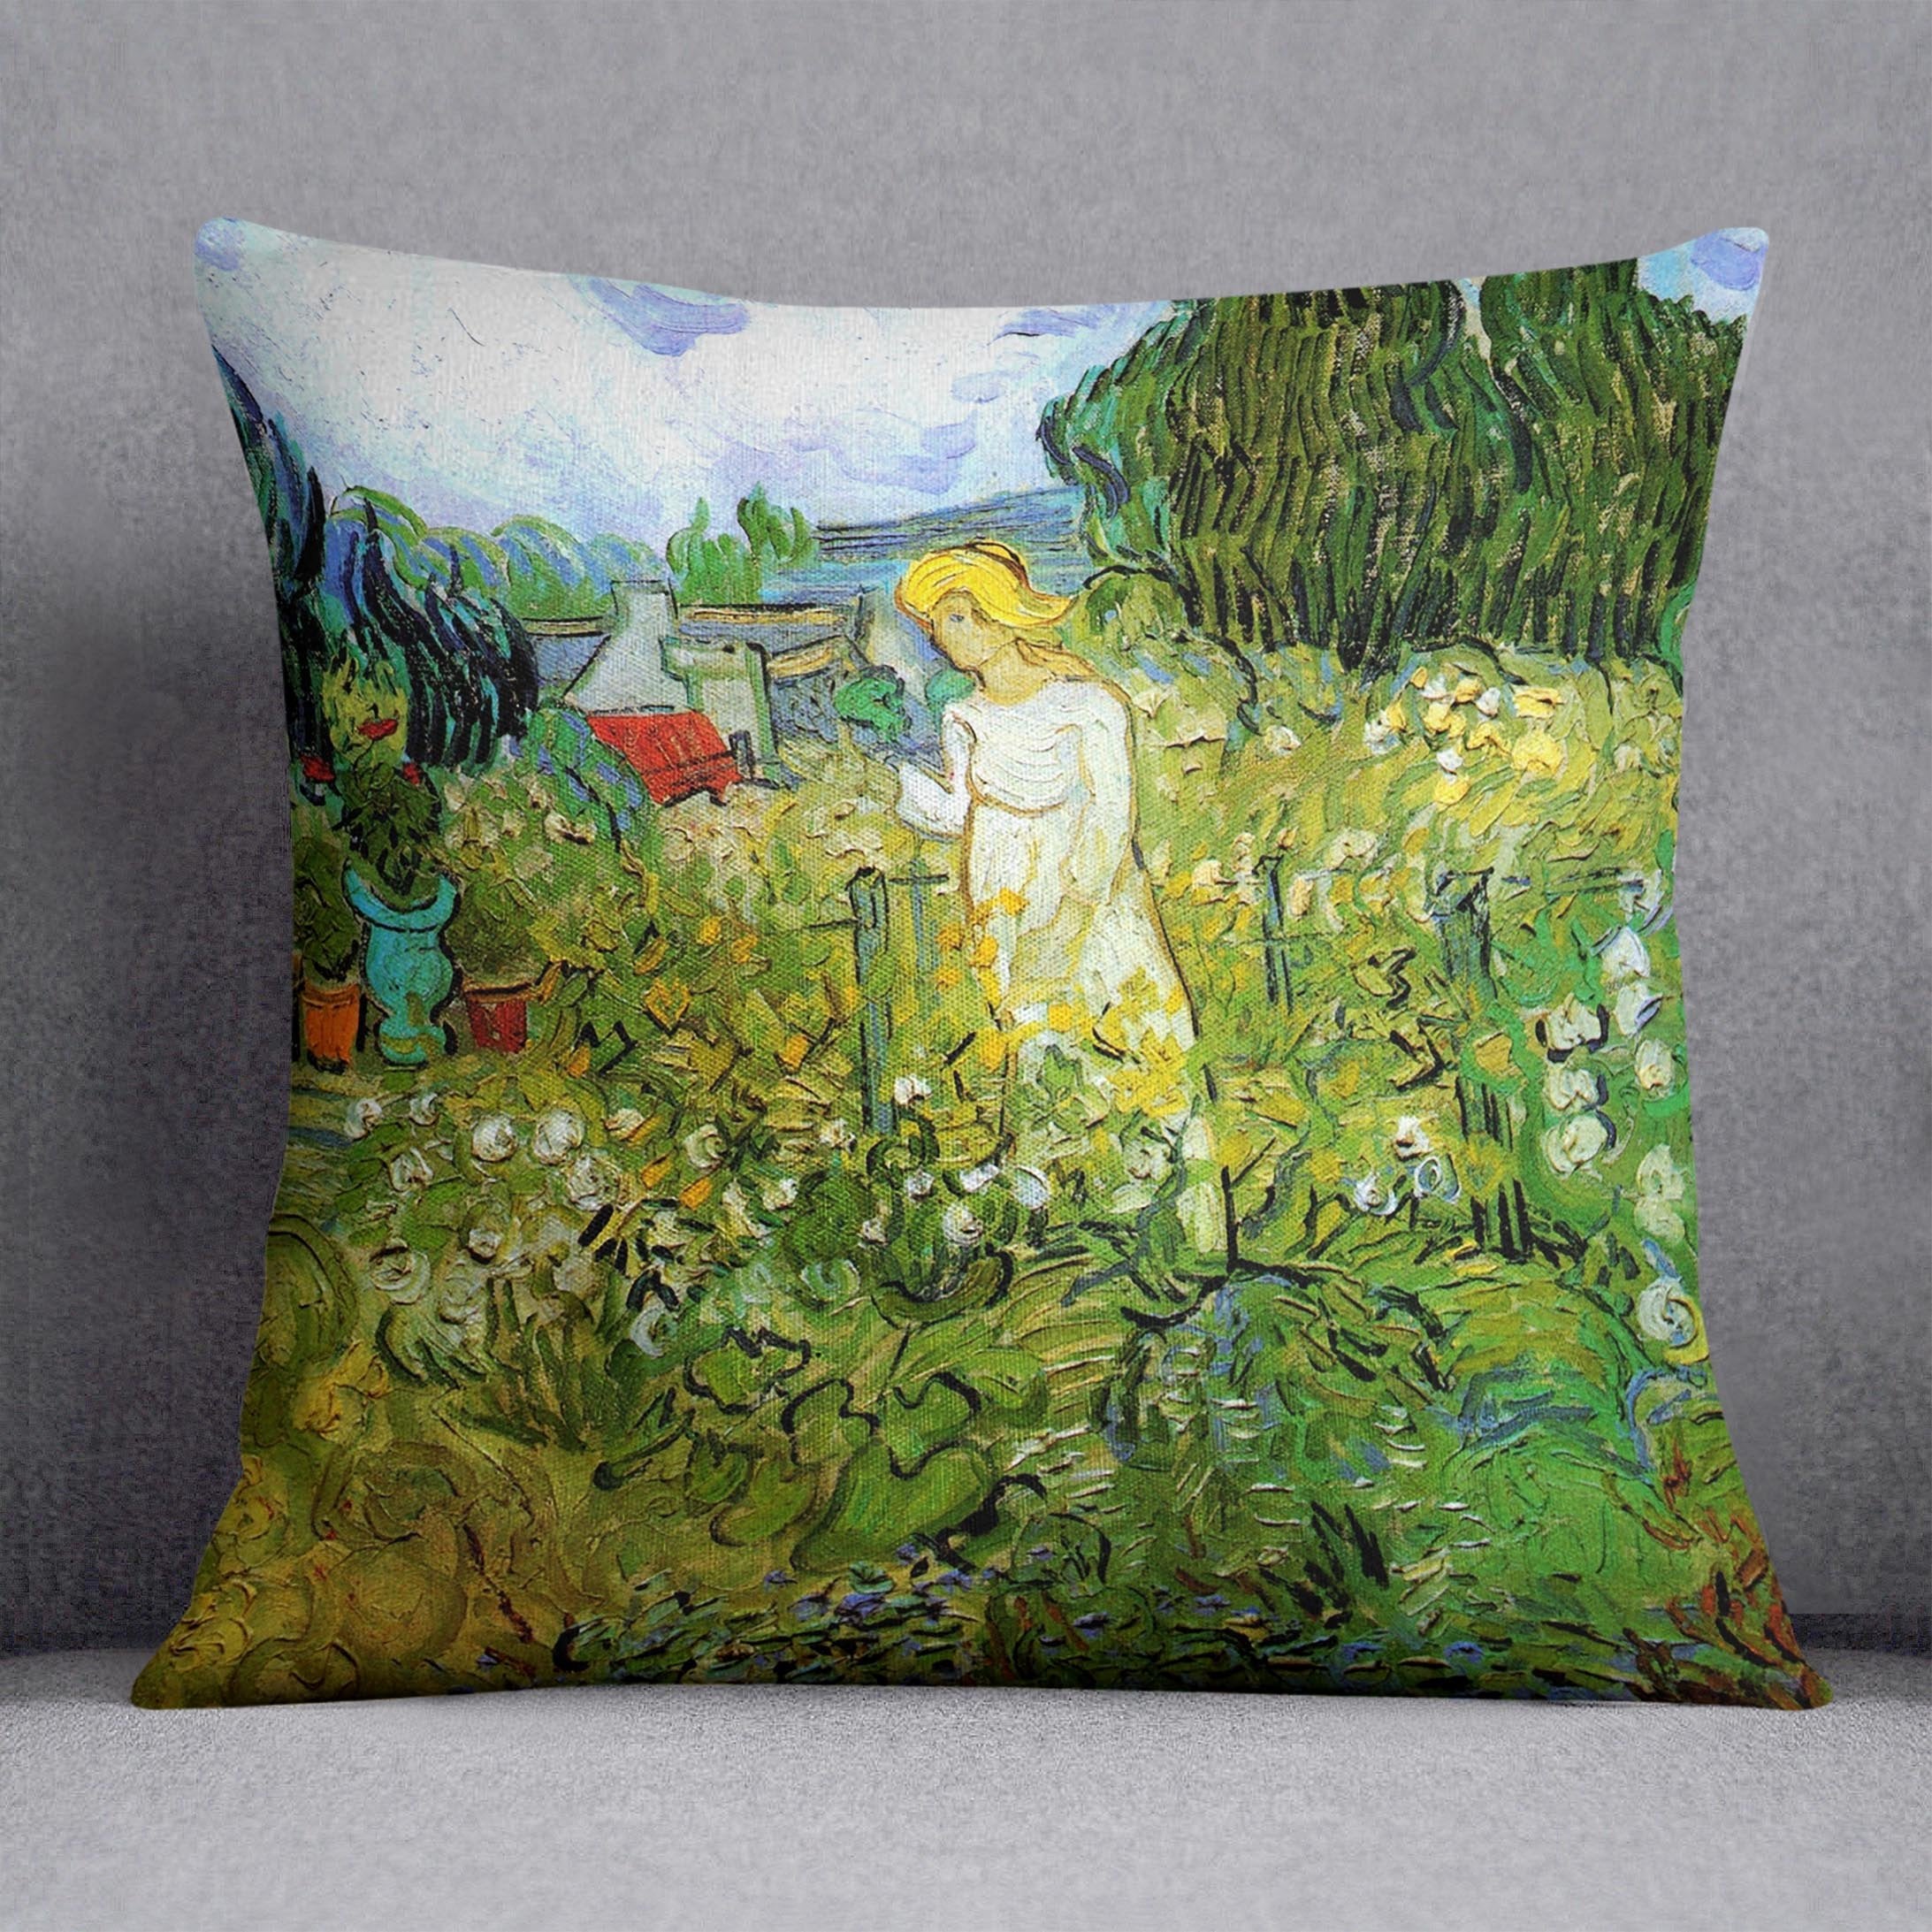 Marguerite Gachet in the Garden by Van Gogh Throw Pillow